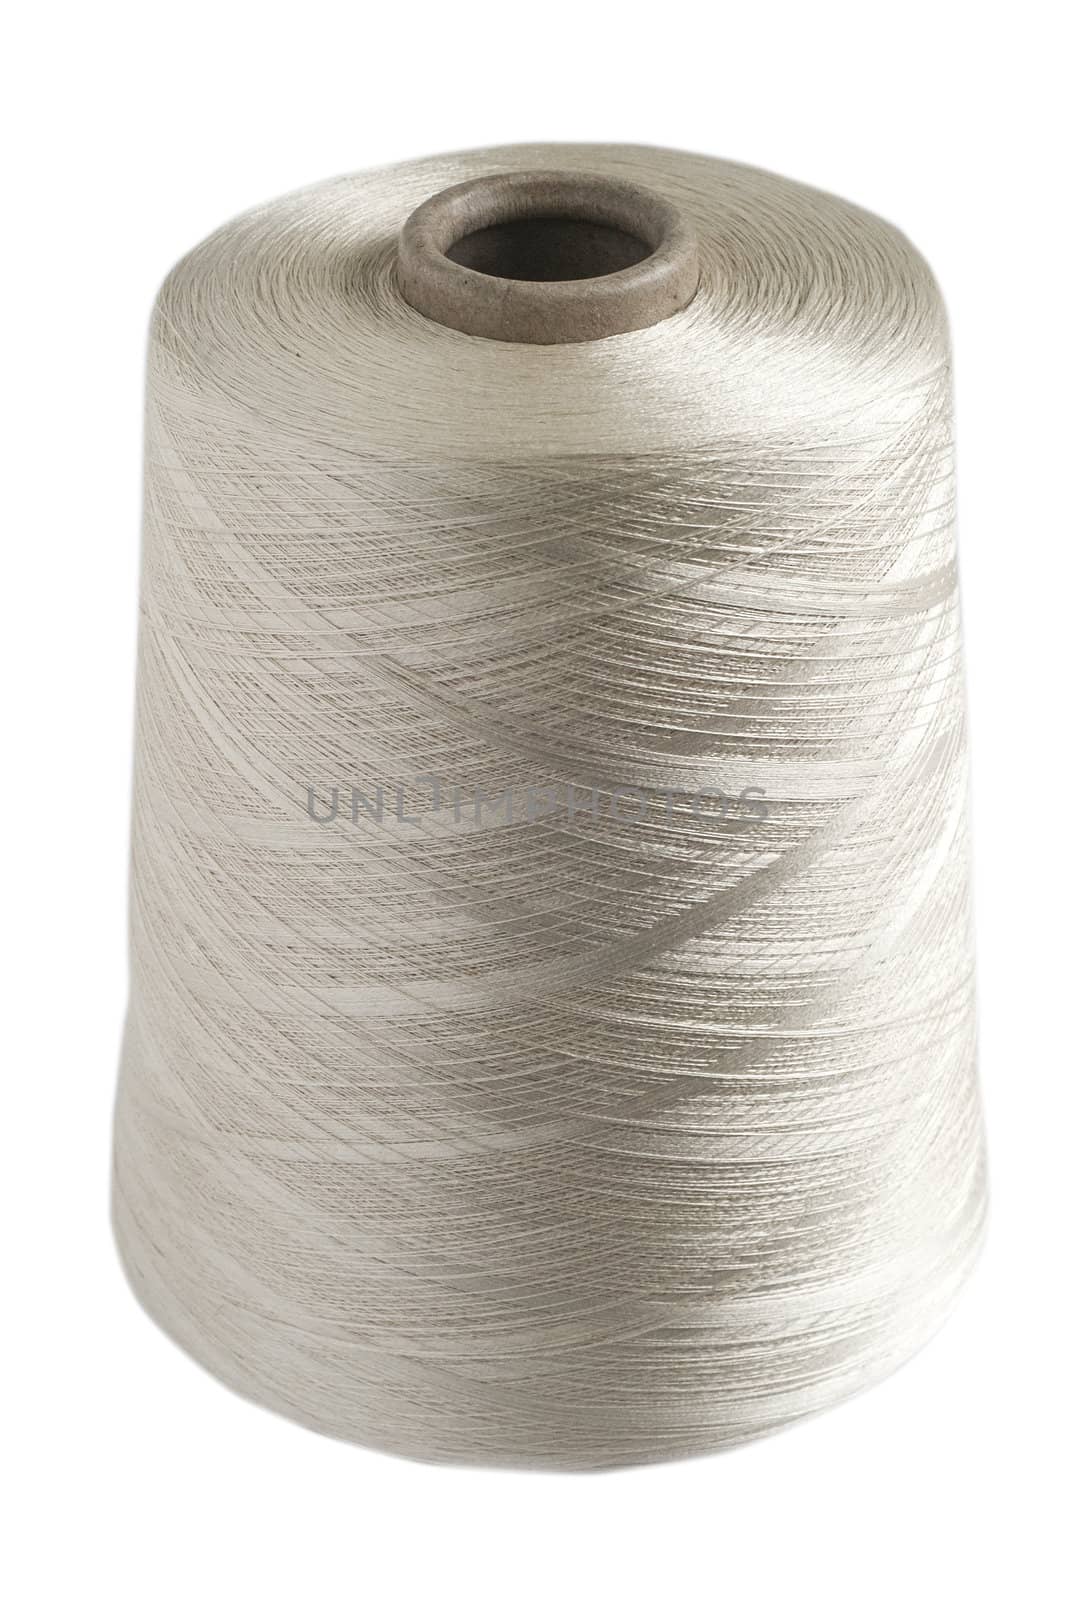 Silk yarn rolled coil by varbenov